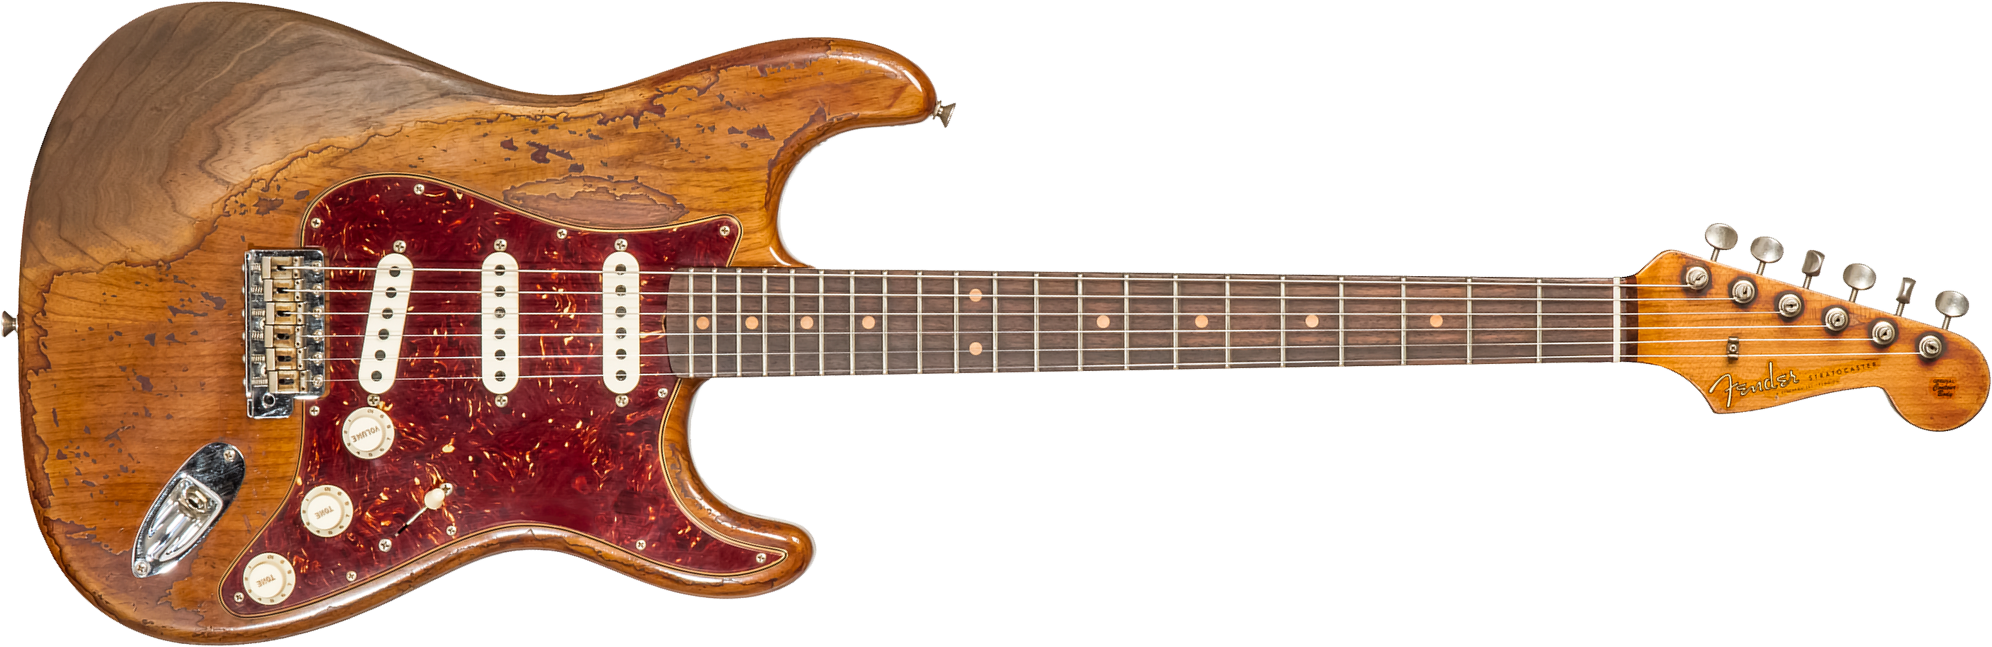 Fender Custom Shop Strat 1961 3s Trem Rw #cz570051 - Super Heavy Relic Natural - Str shape electric guitar - Main picture